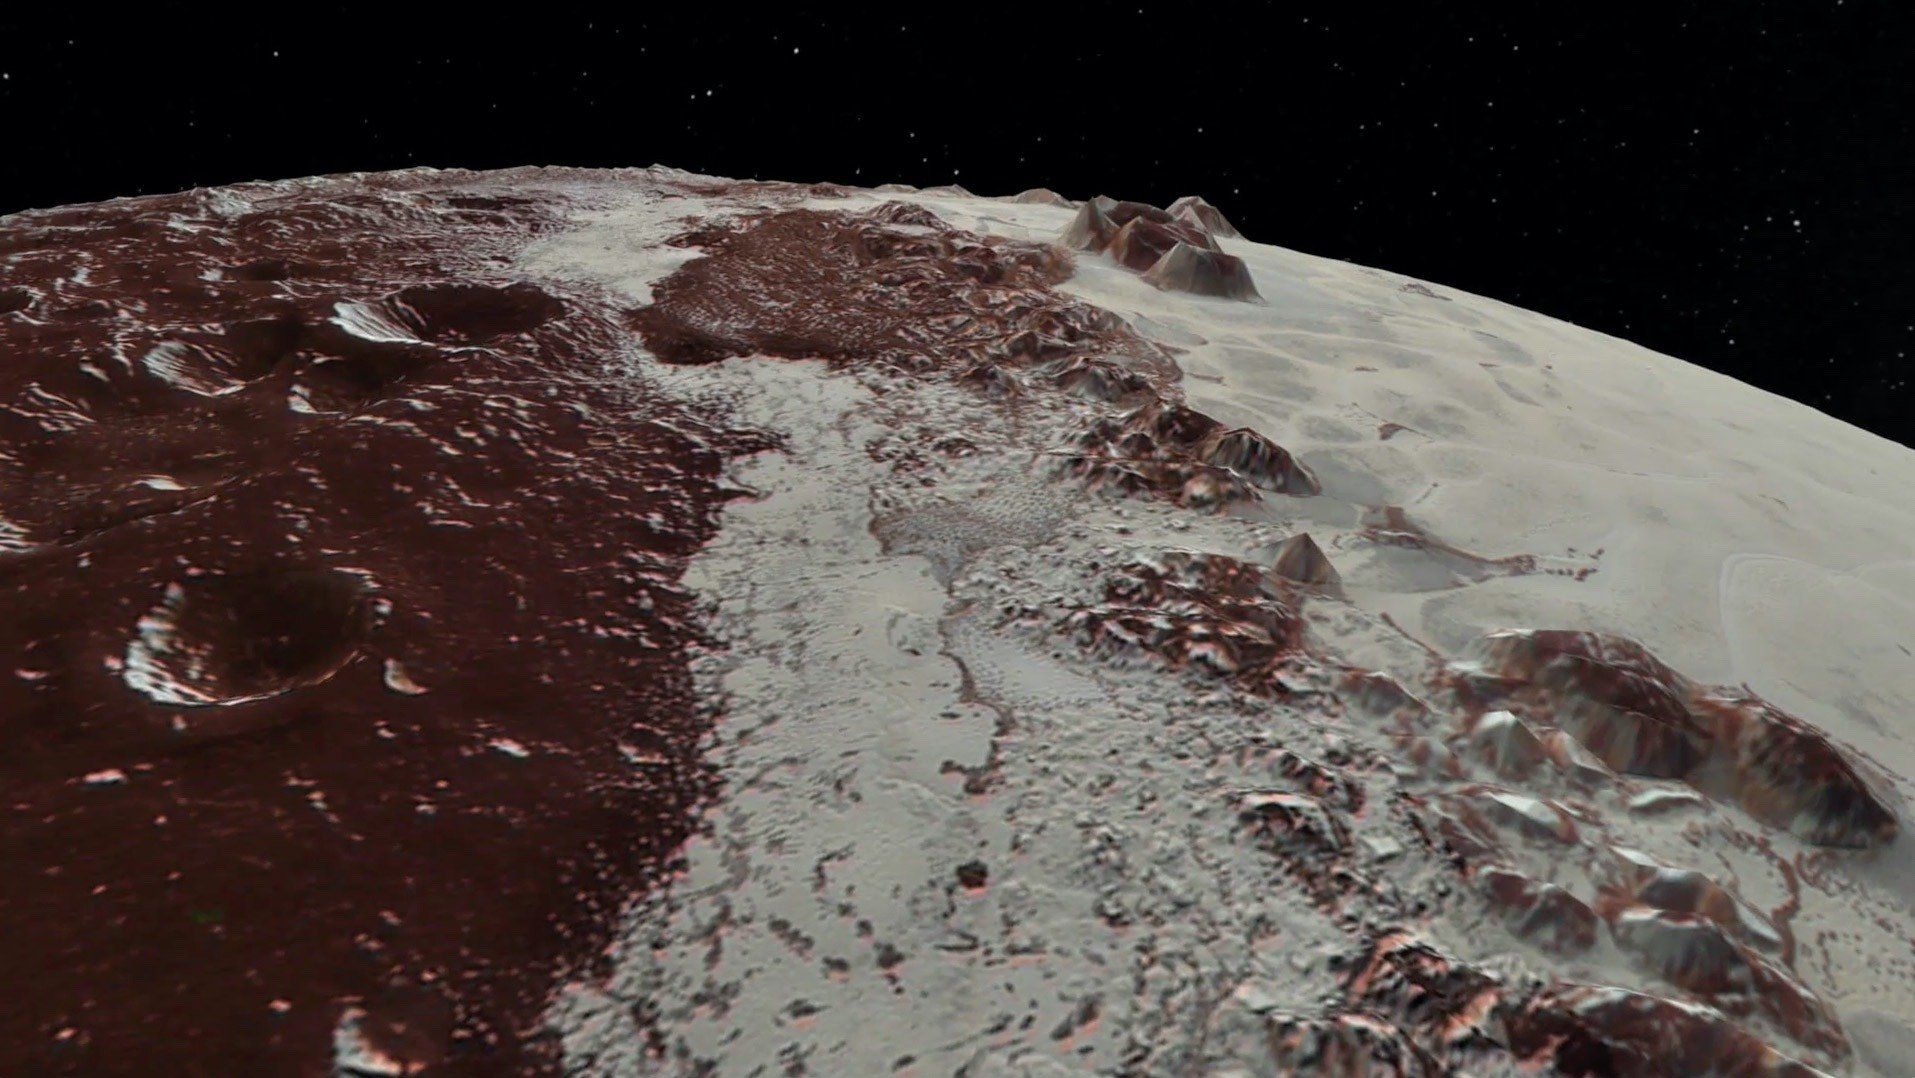 The border between Cthulhu Macula and Sputnik Planitia